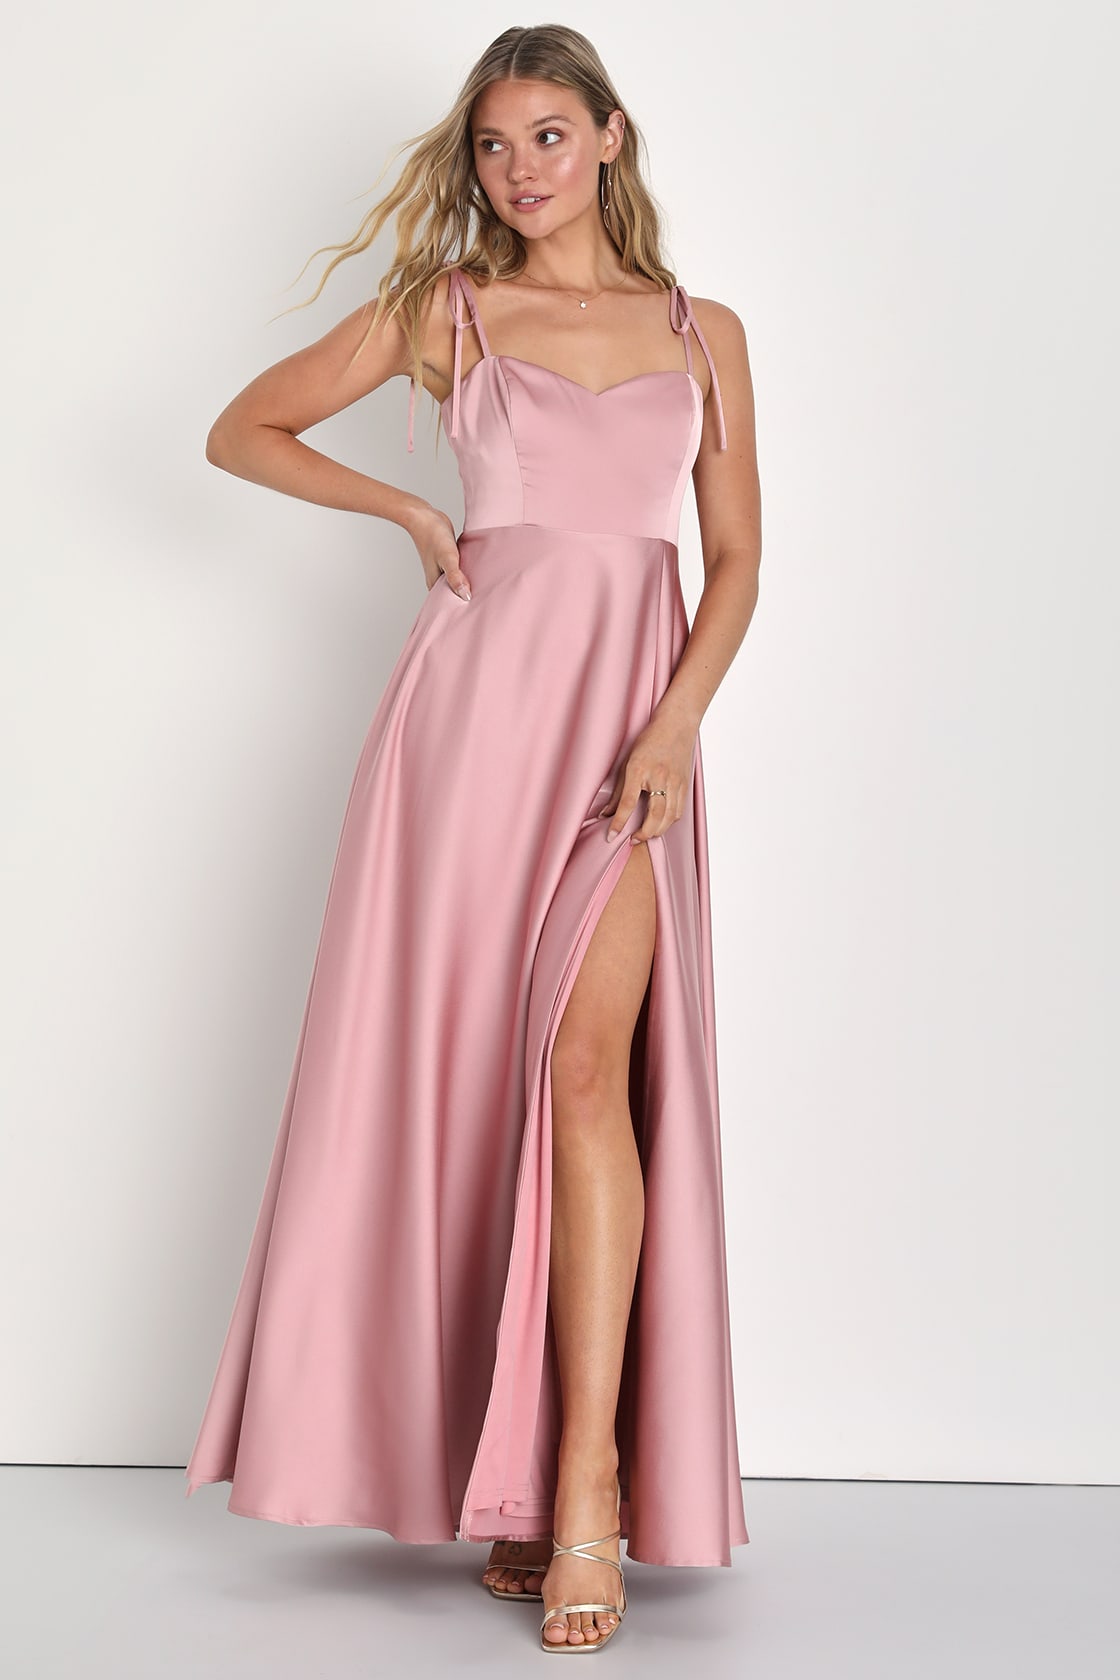 Delightful Vision Blush Pink Tie-Strap Satin Maxi Dress